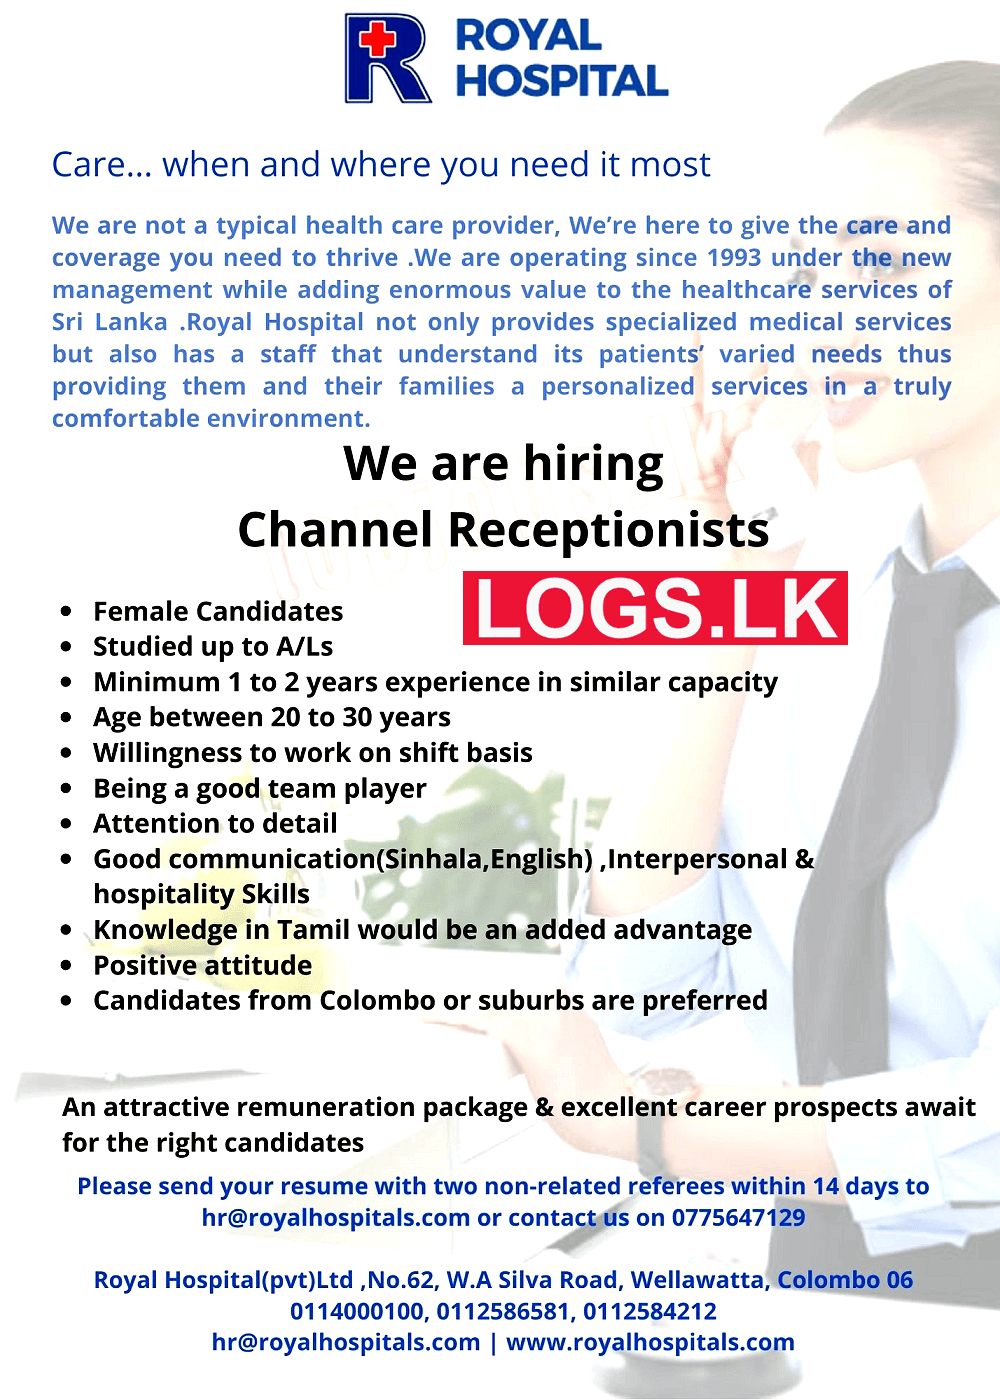 Channel Receptionists Job Vacancies at Royal Hospital Job Vacancies in Sri Lanka